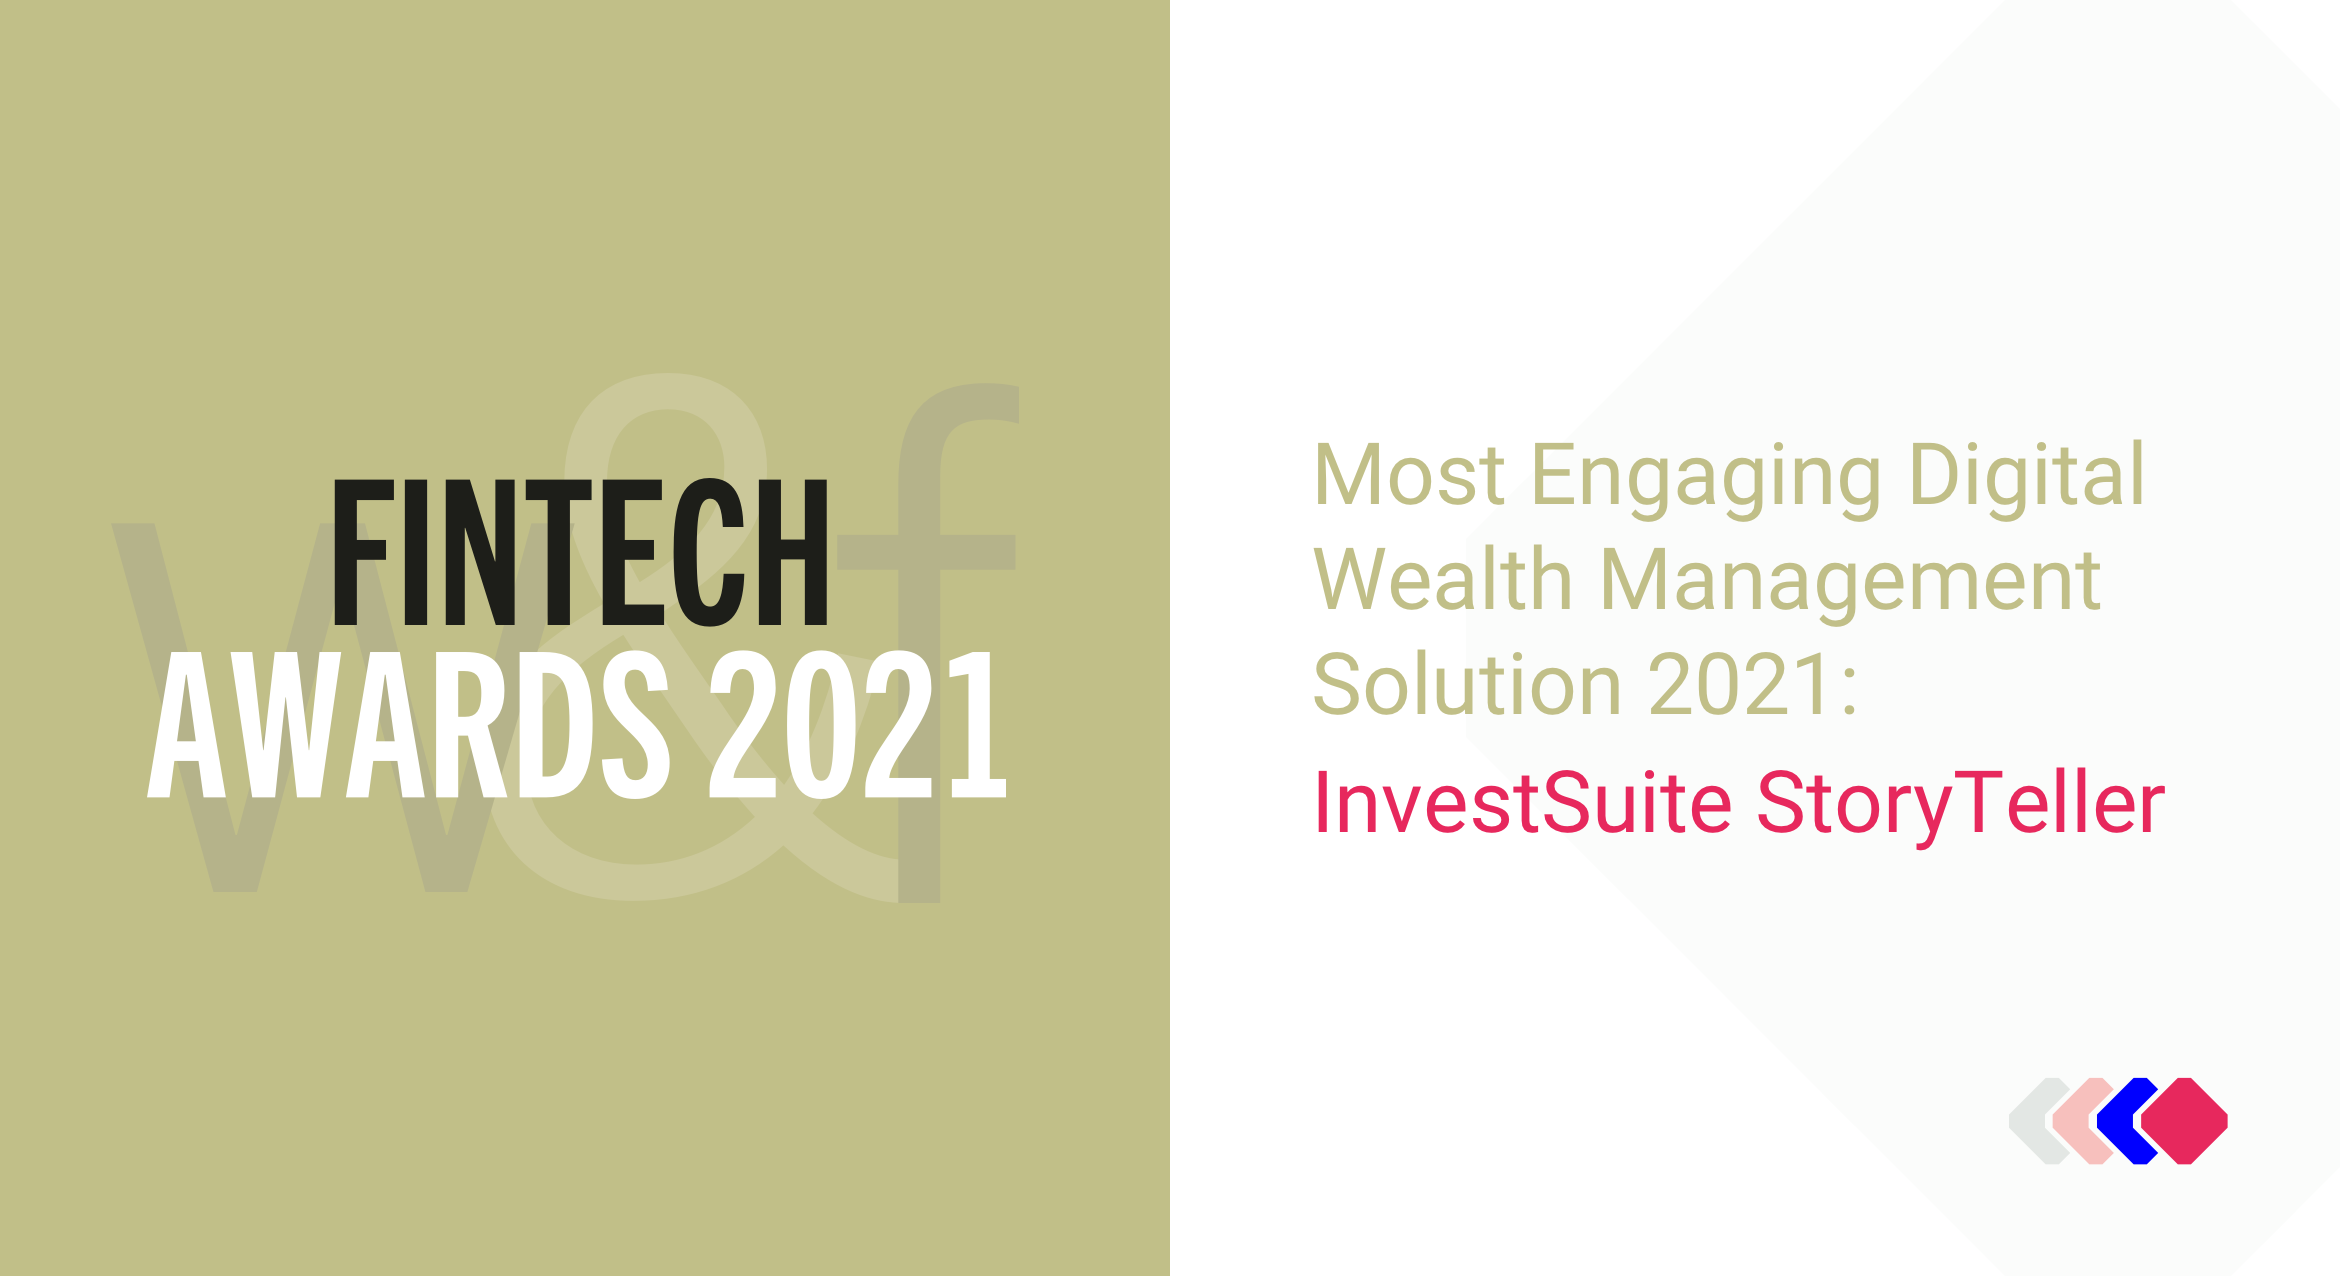 InvestSuite’s StoryTeller is "Most Engaging Digital WealthManagement Solution”